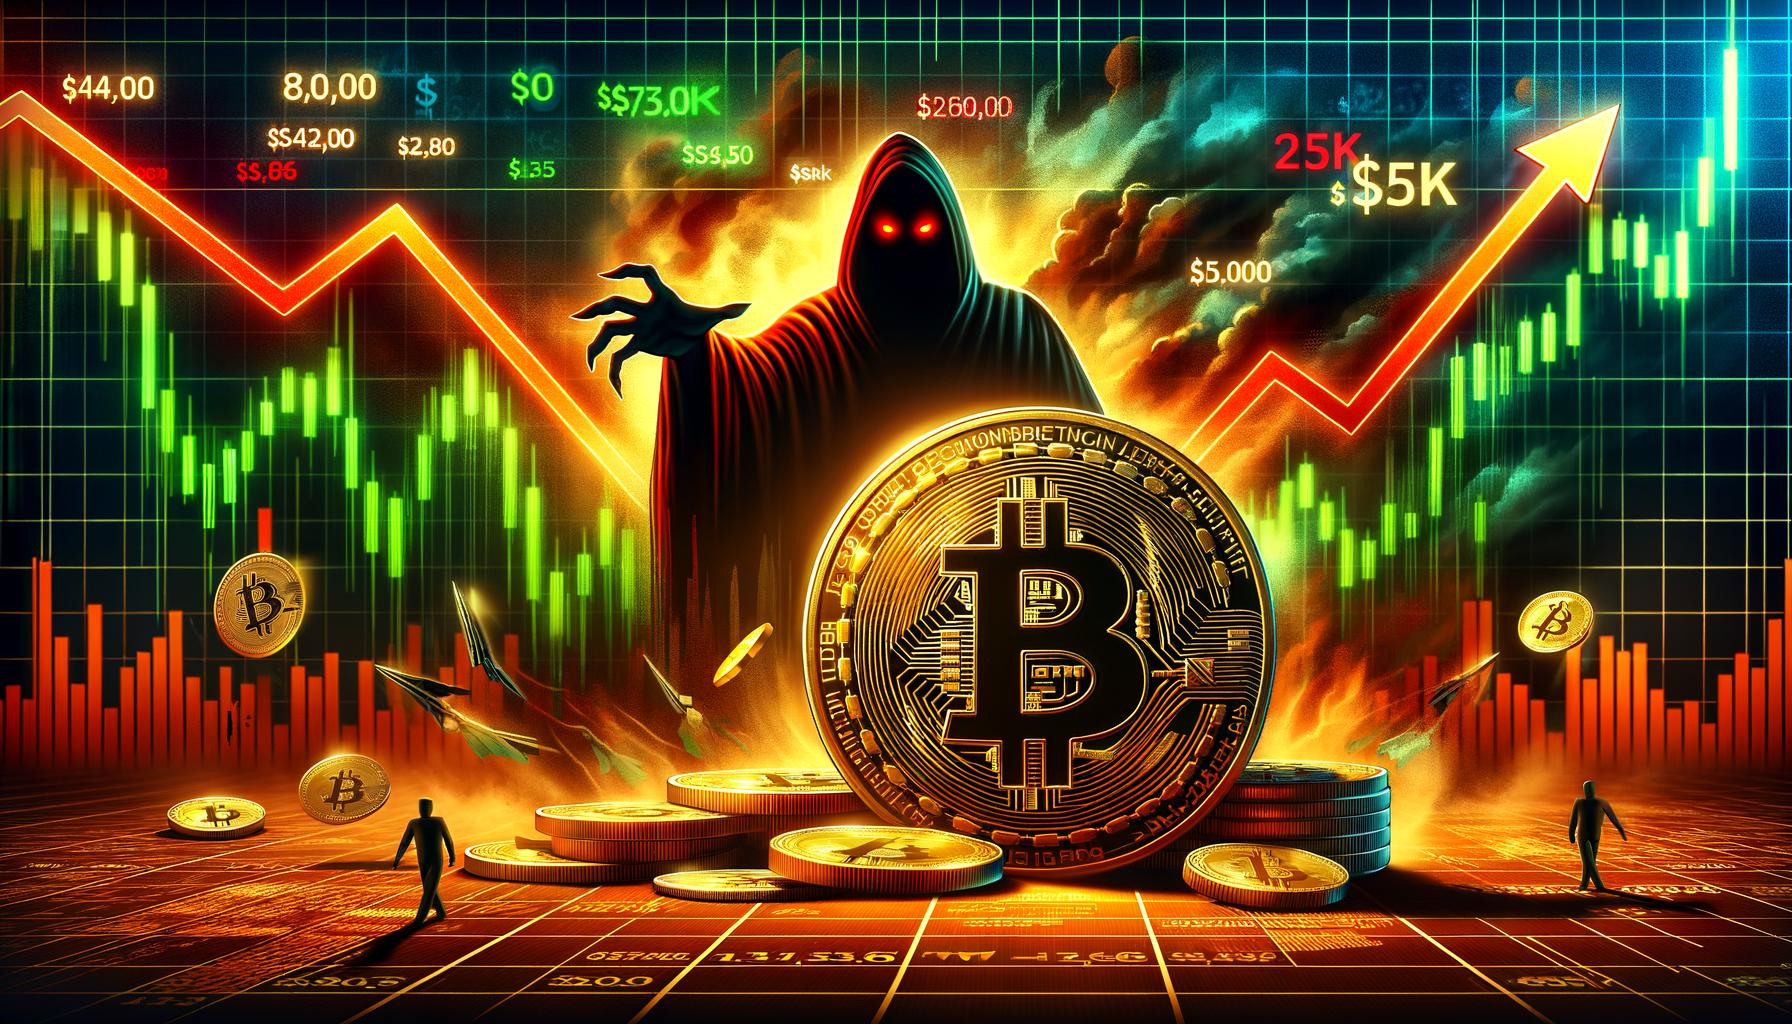 Bitcoin Price Turns Red